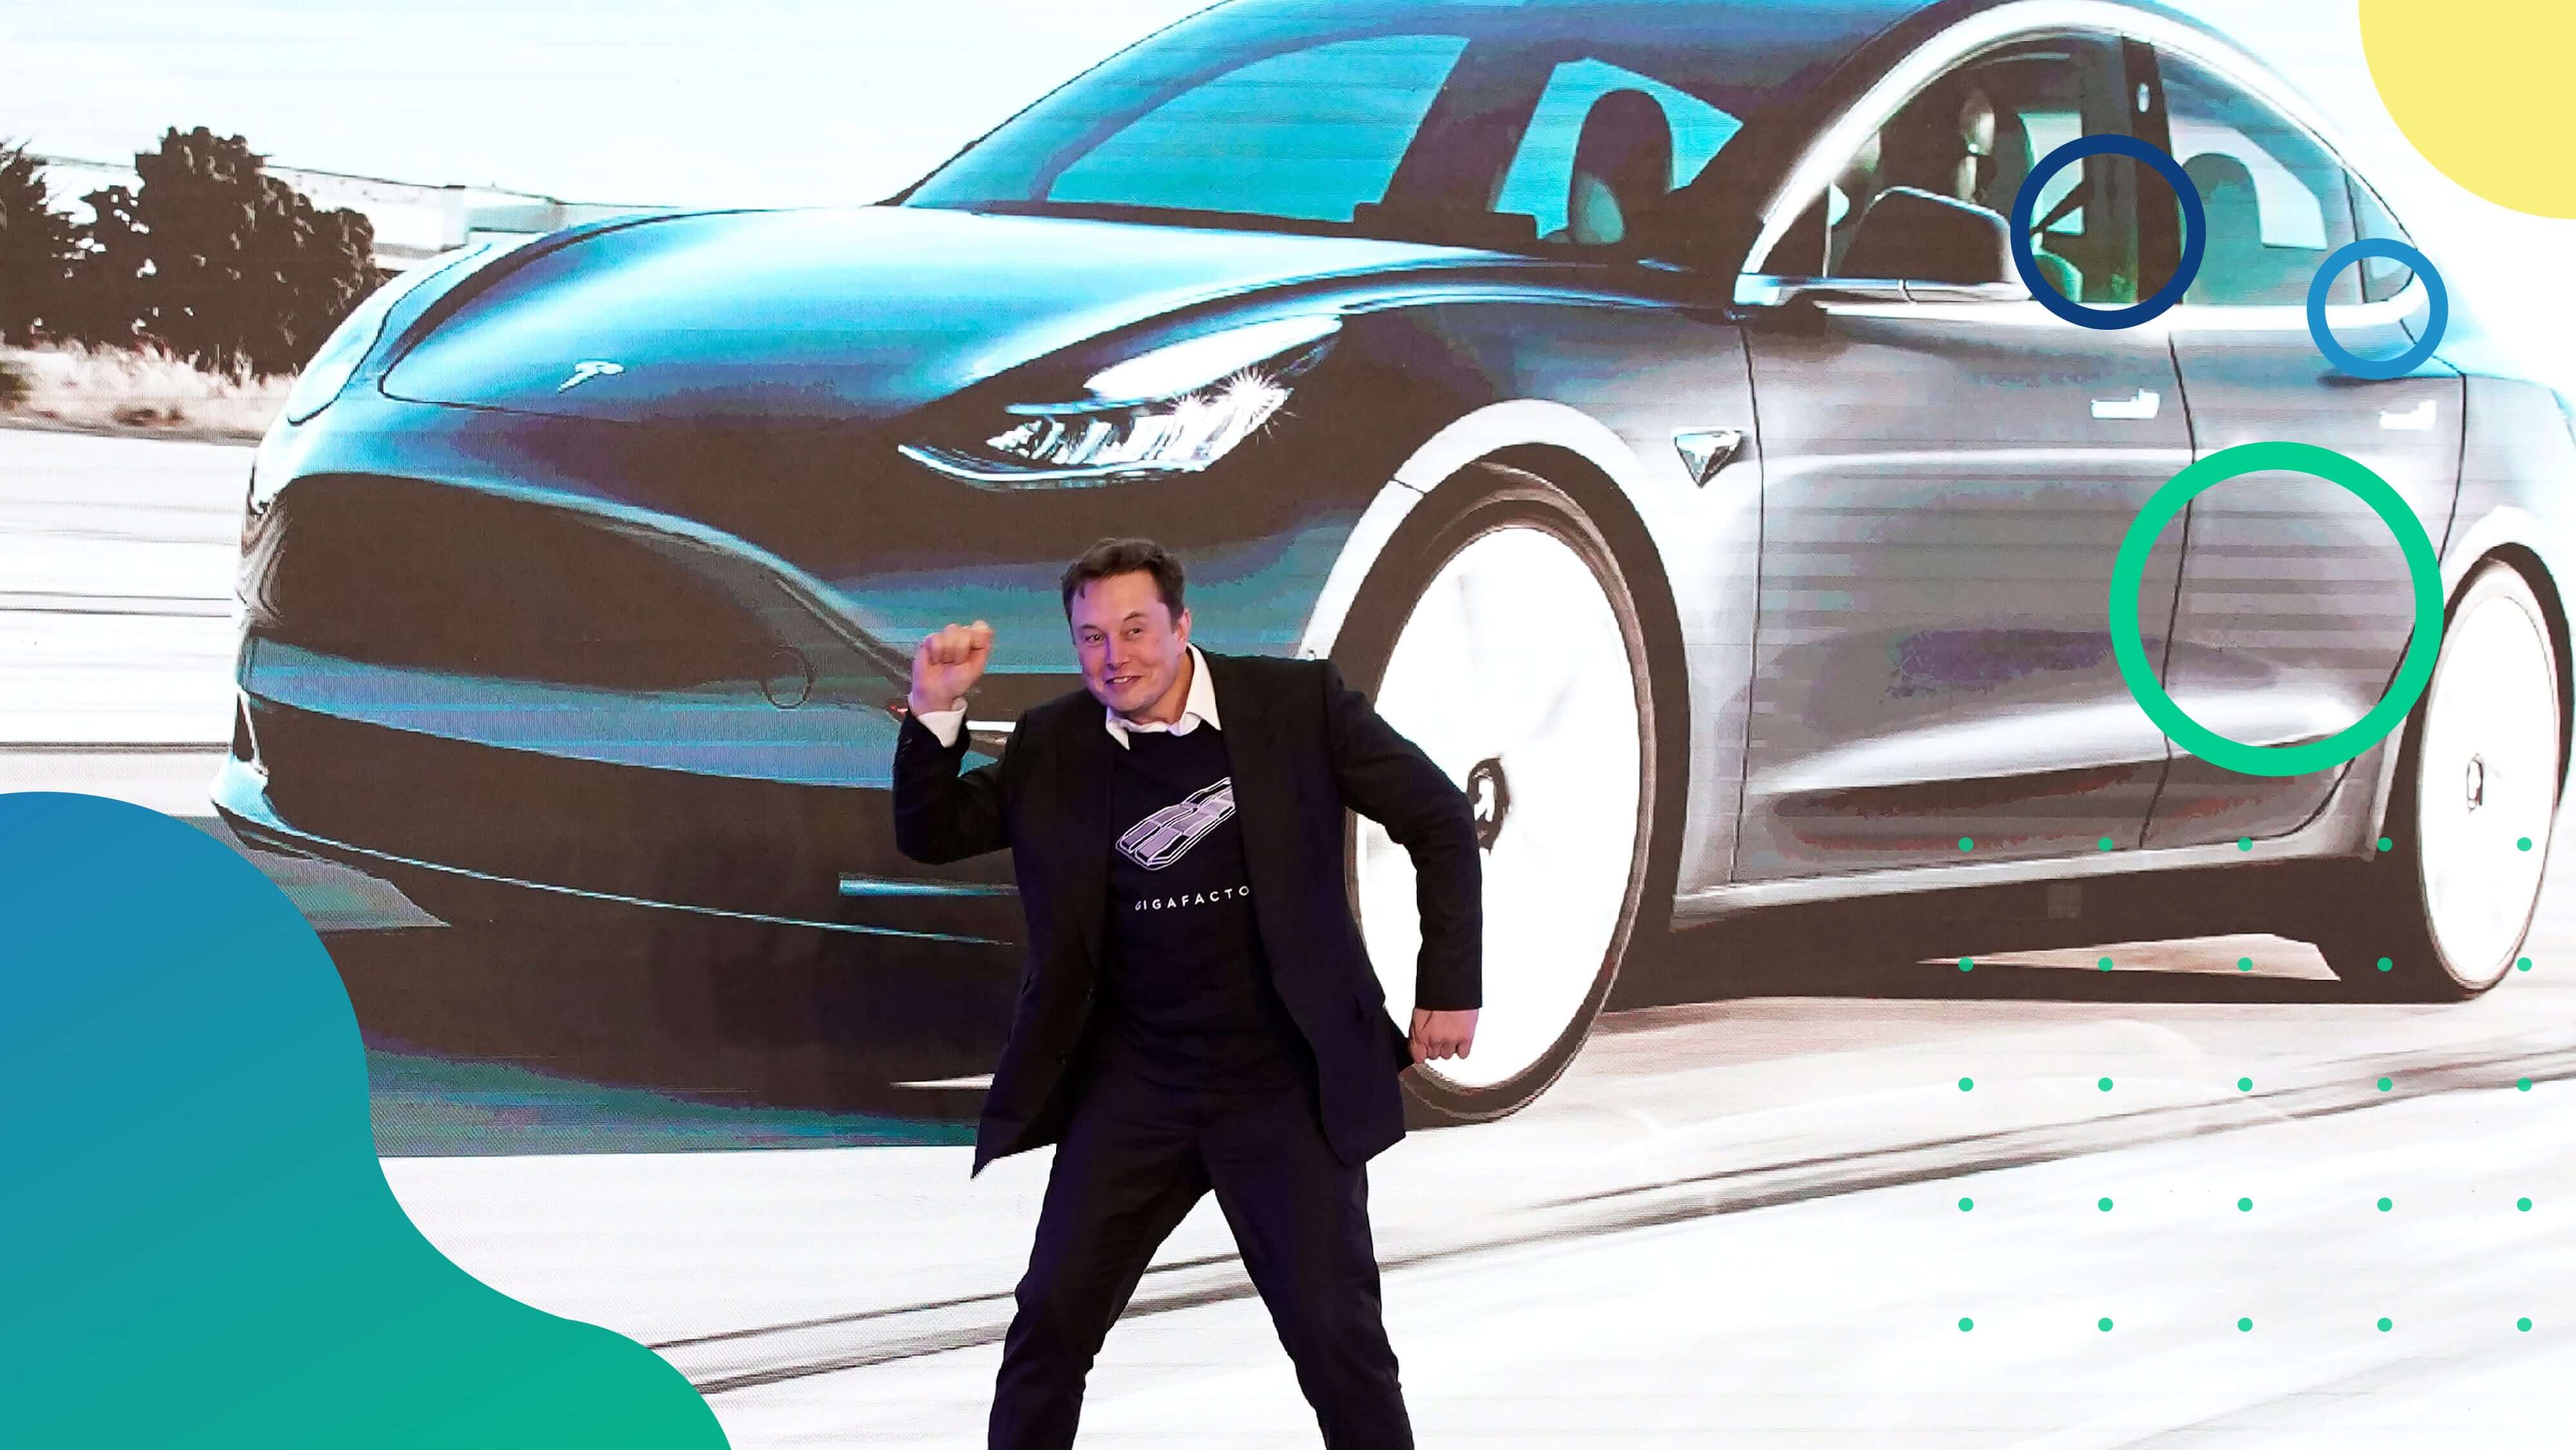 Elon Musk is so charismatic